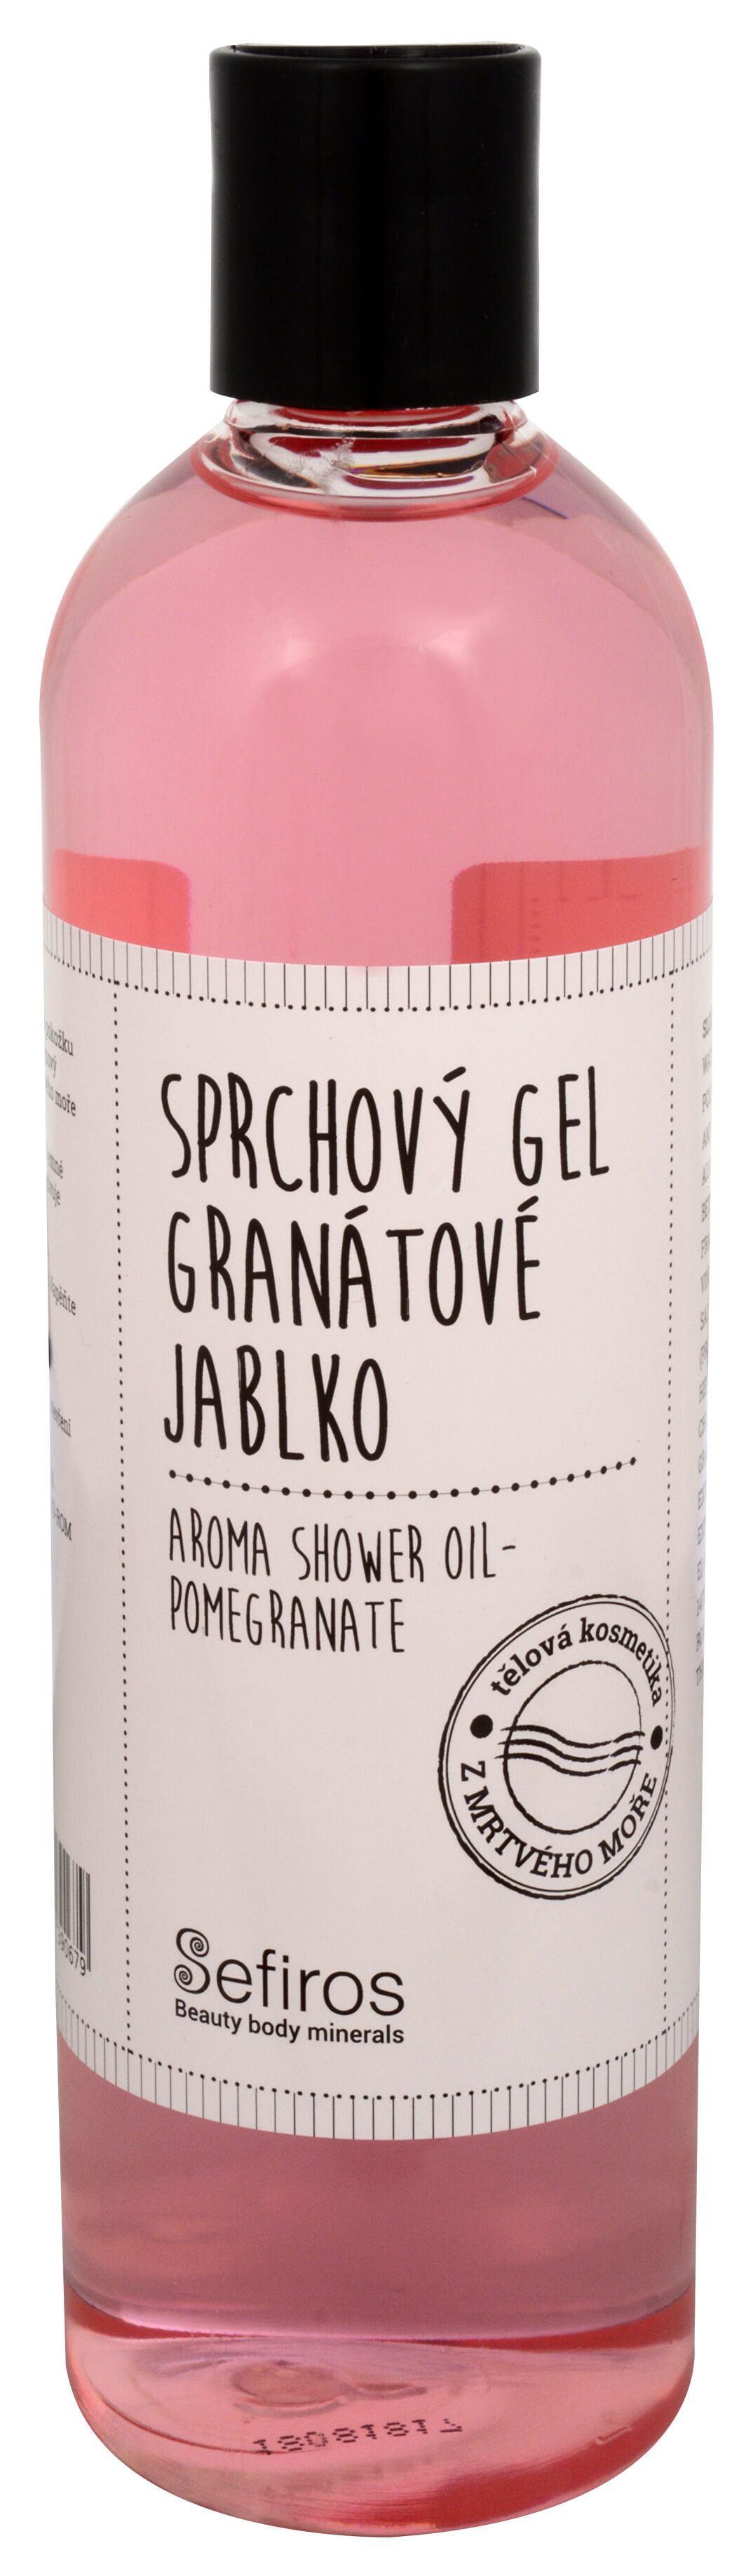 Zobrazit detail výrobku Sefiross Sprchový gel Granátové jablko (Aroma Shower Oil) 400 ml